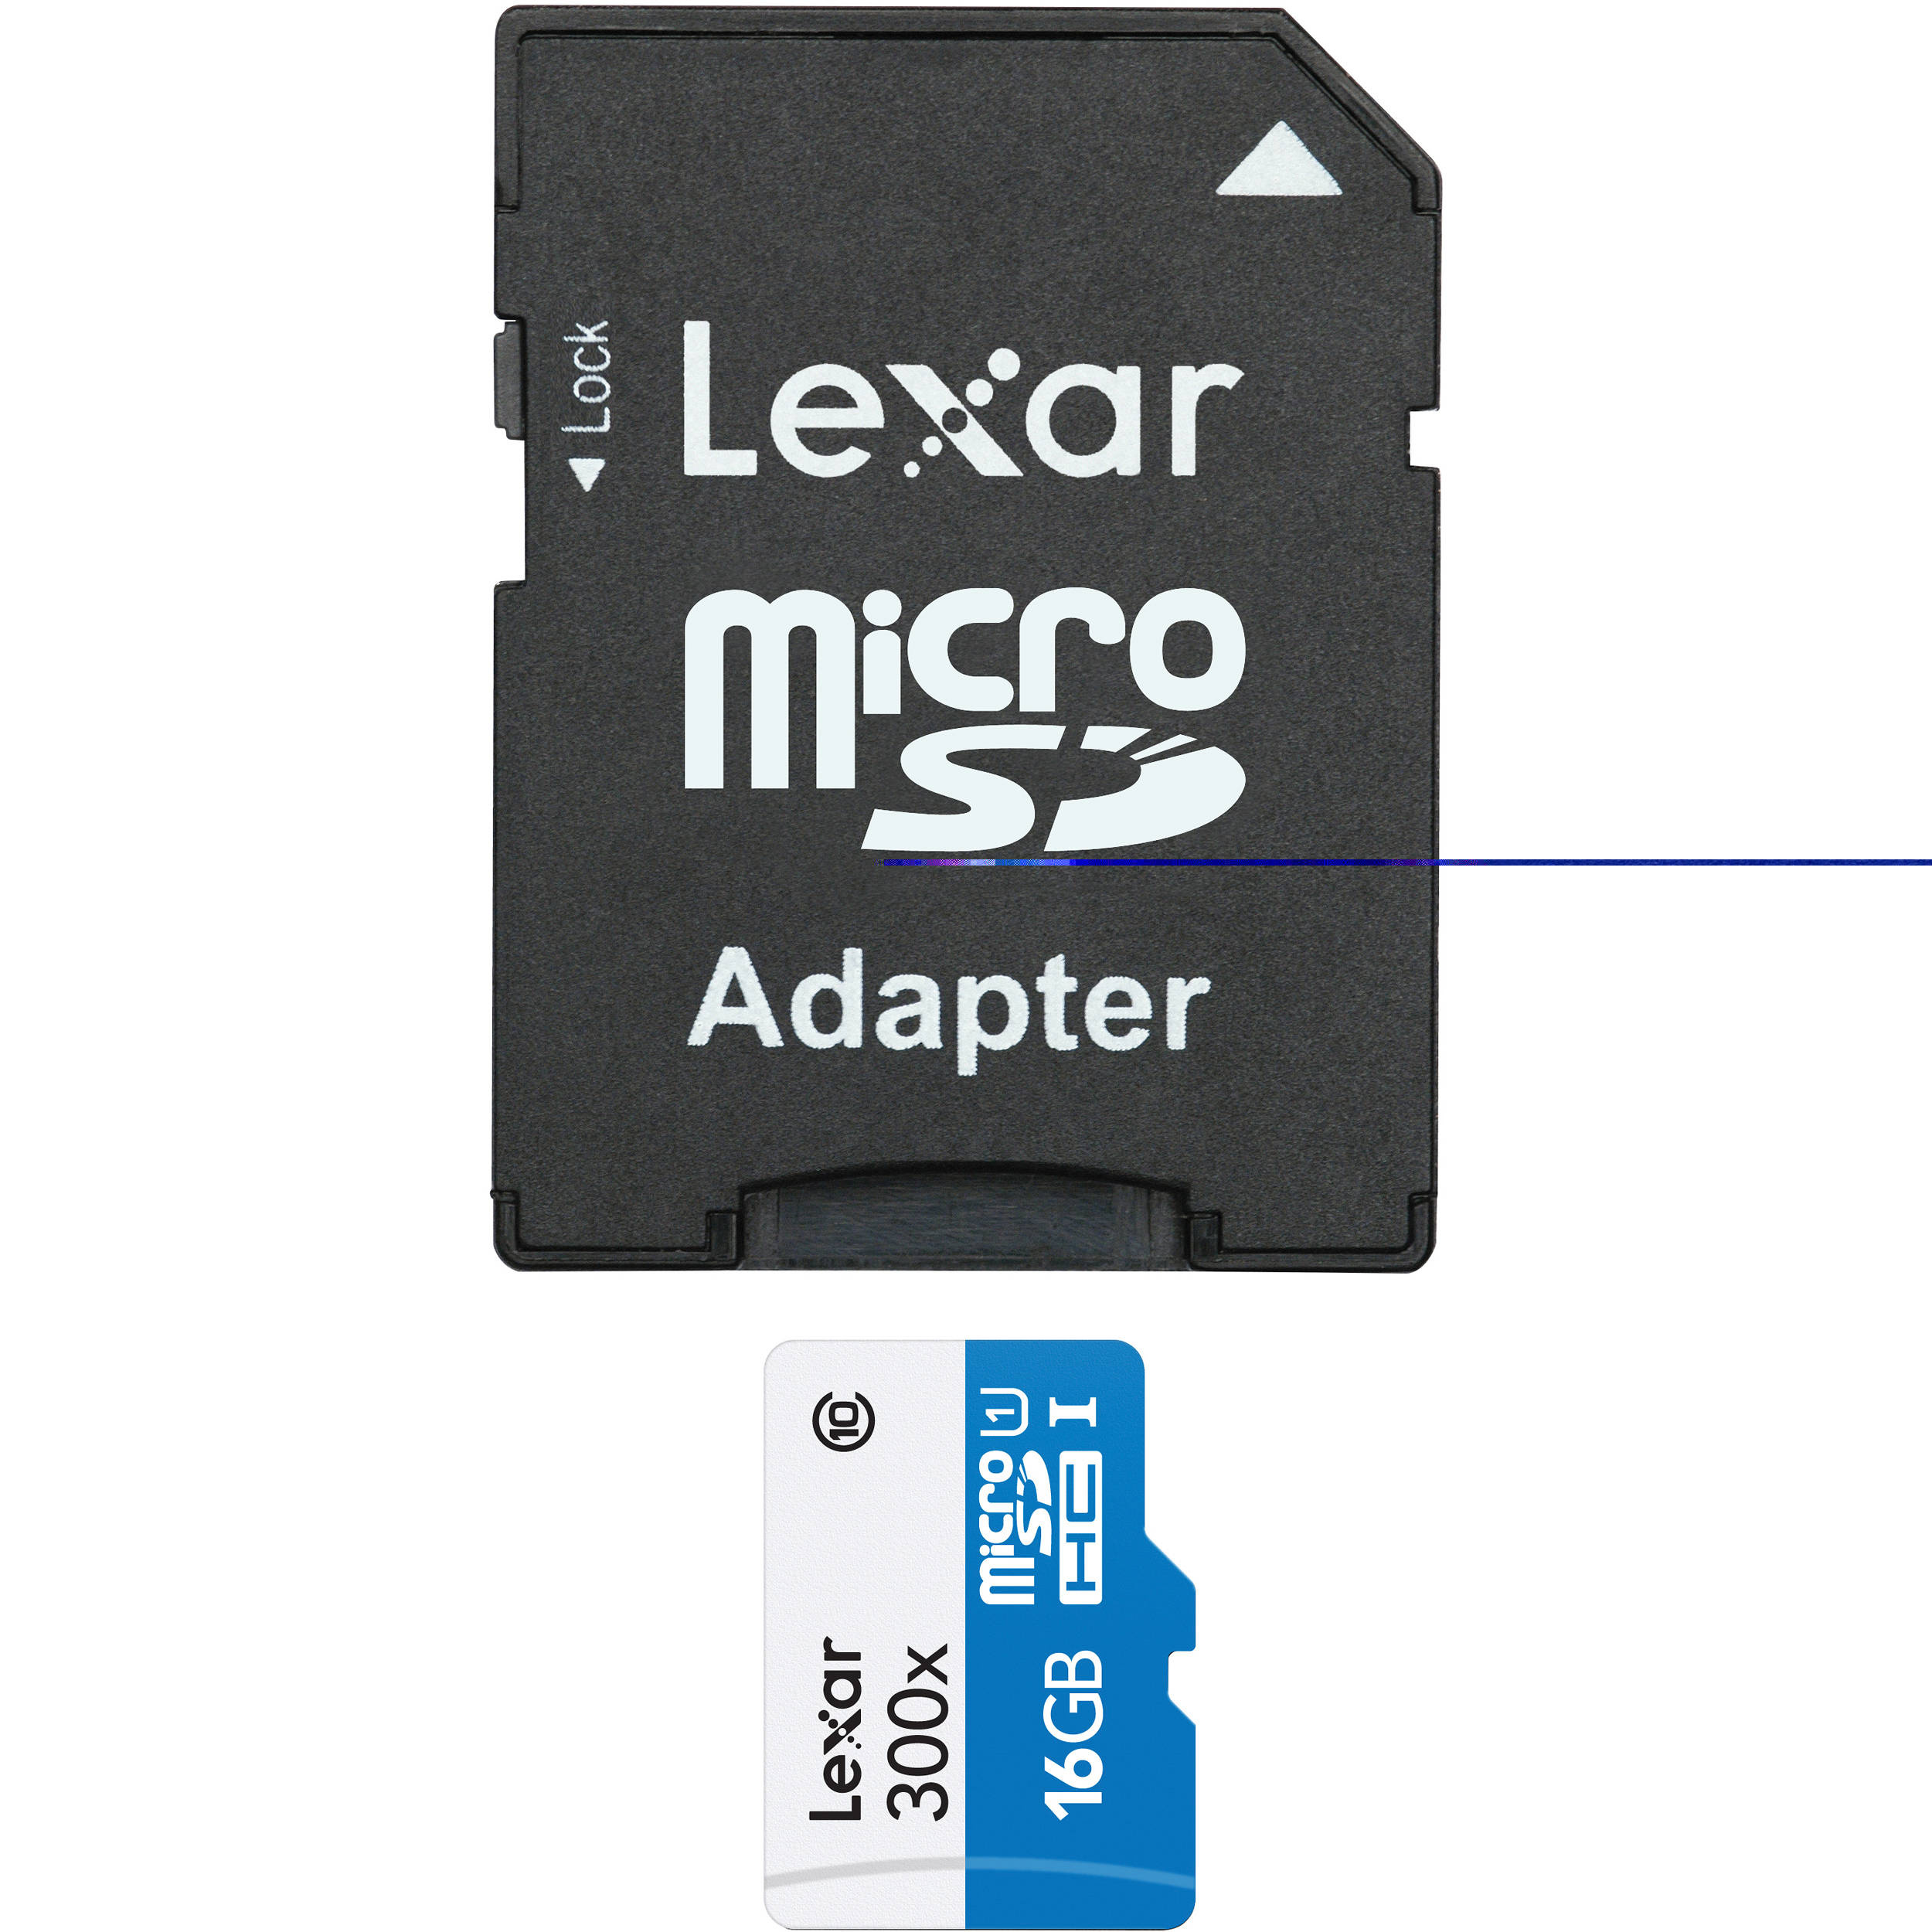 Lexar 16GB High Performance UHS-I microSDHC Memory Card